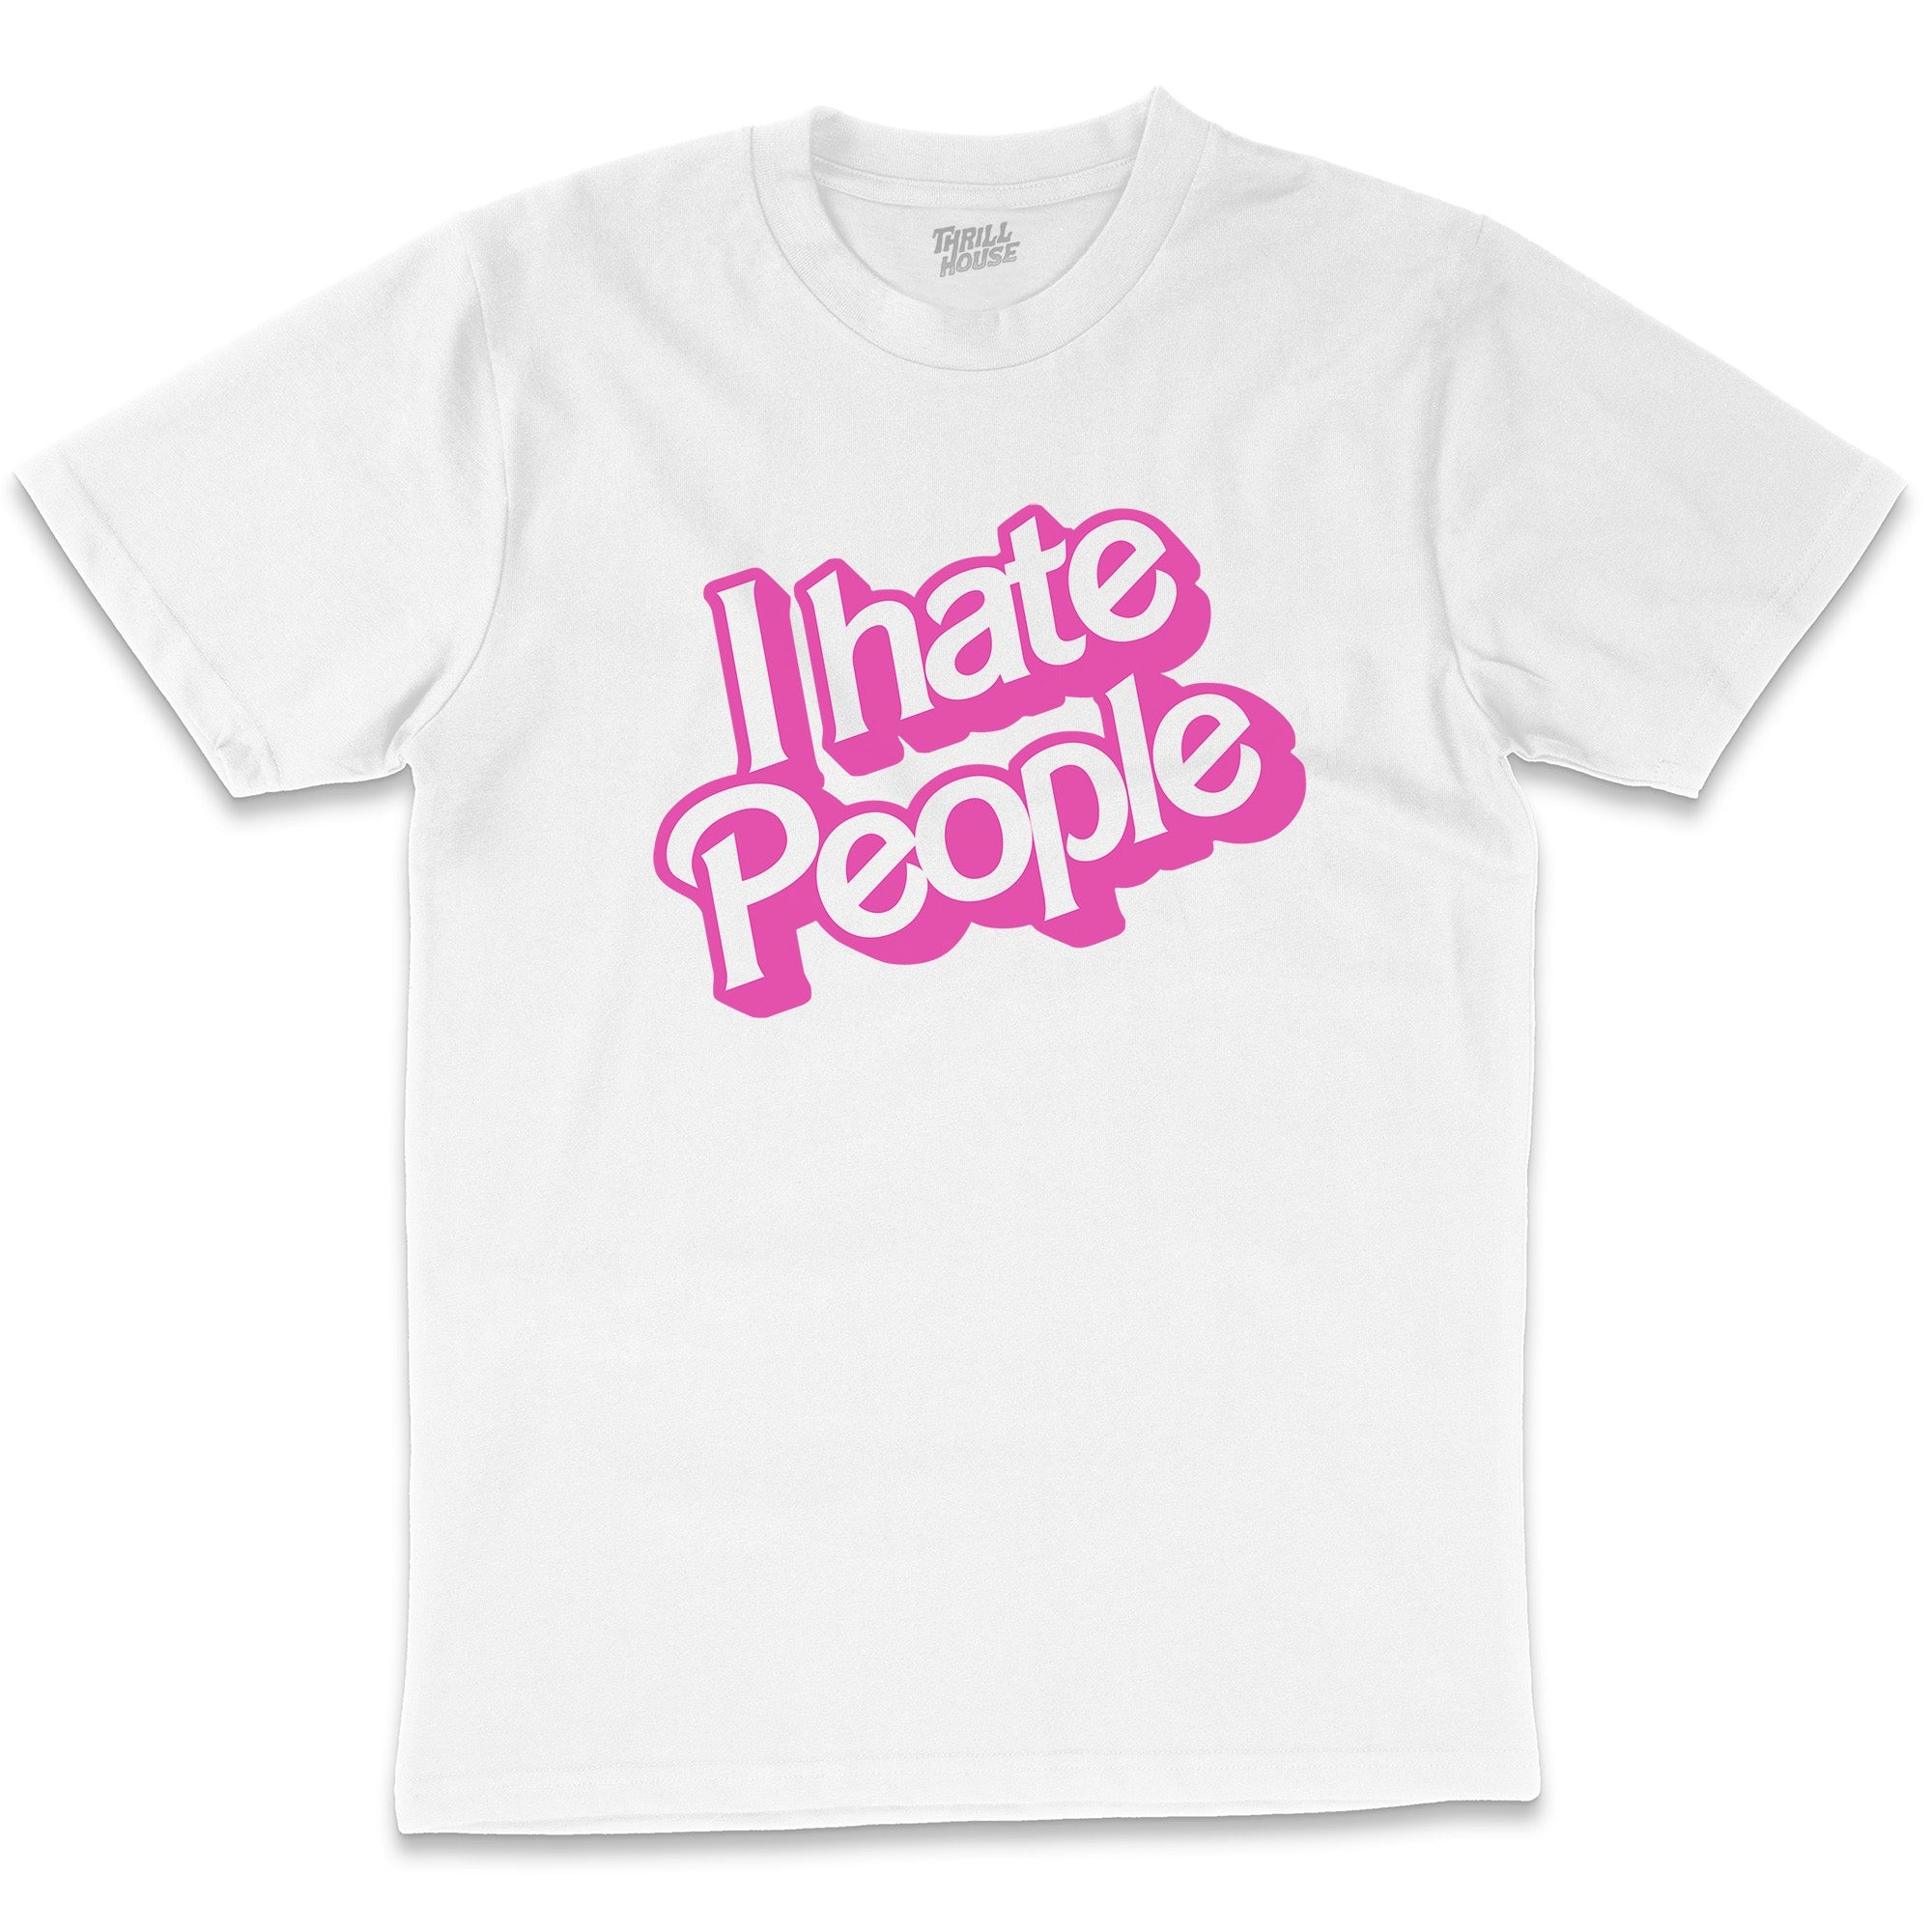 I Hate People T-Shirt Australia Online White